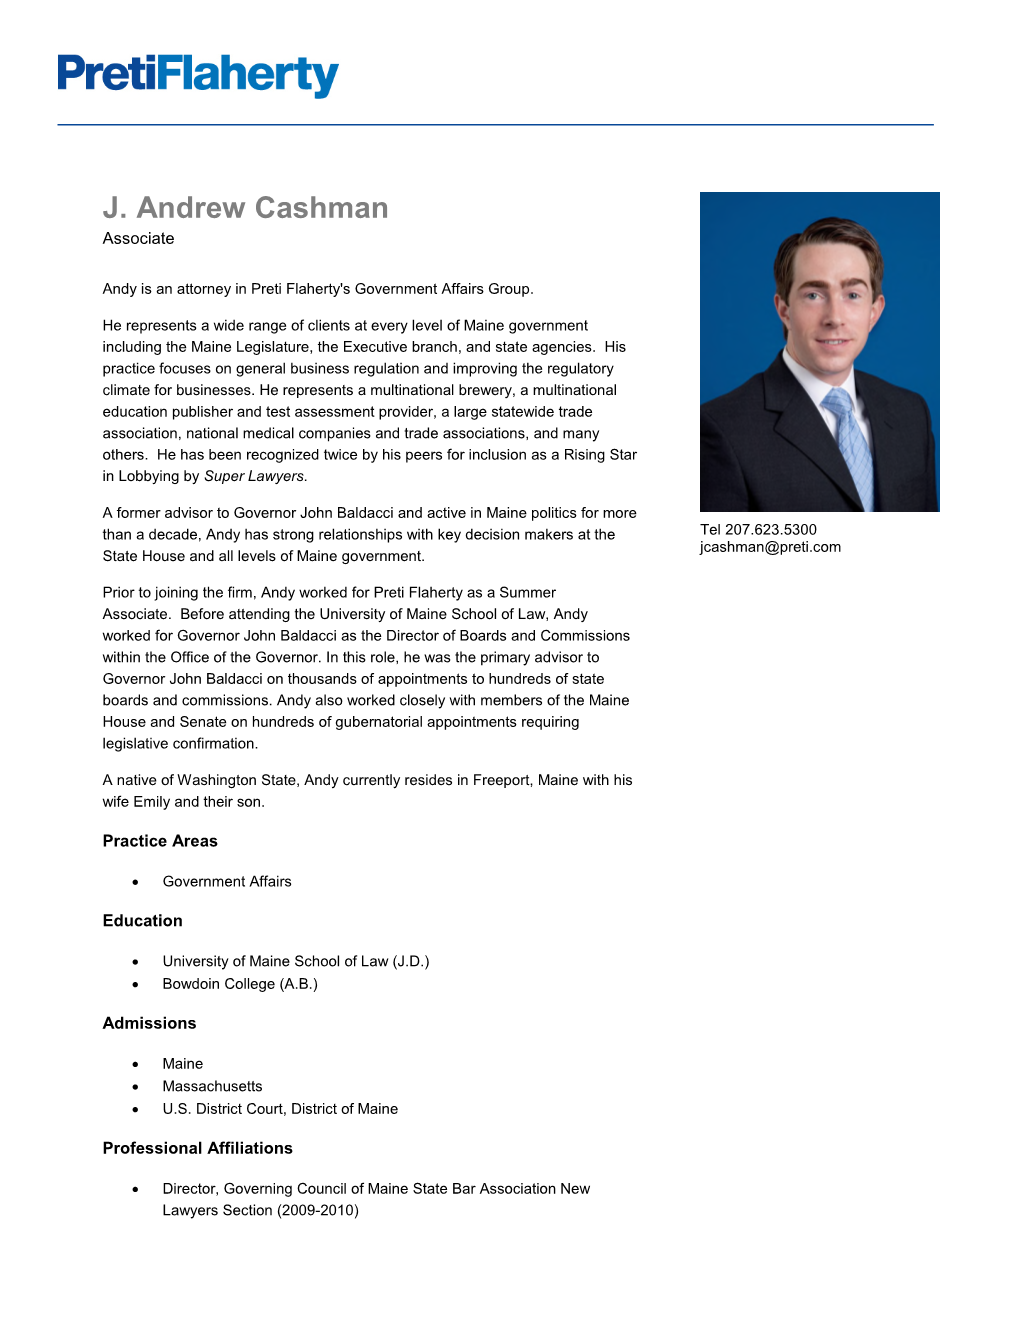 J. Andrew Cashman Associate